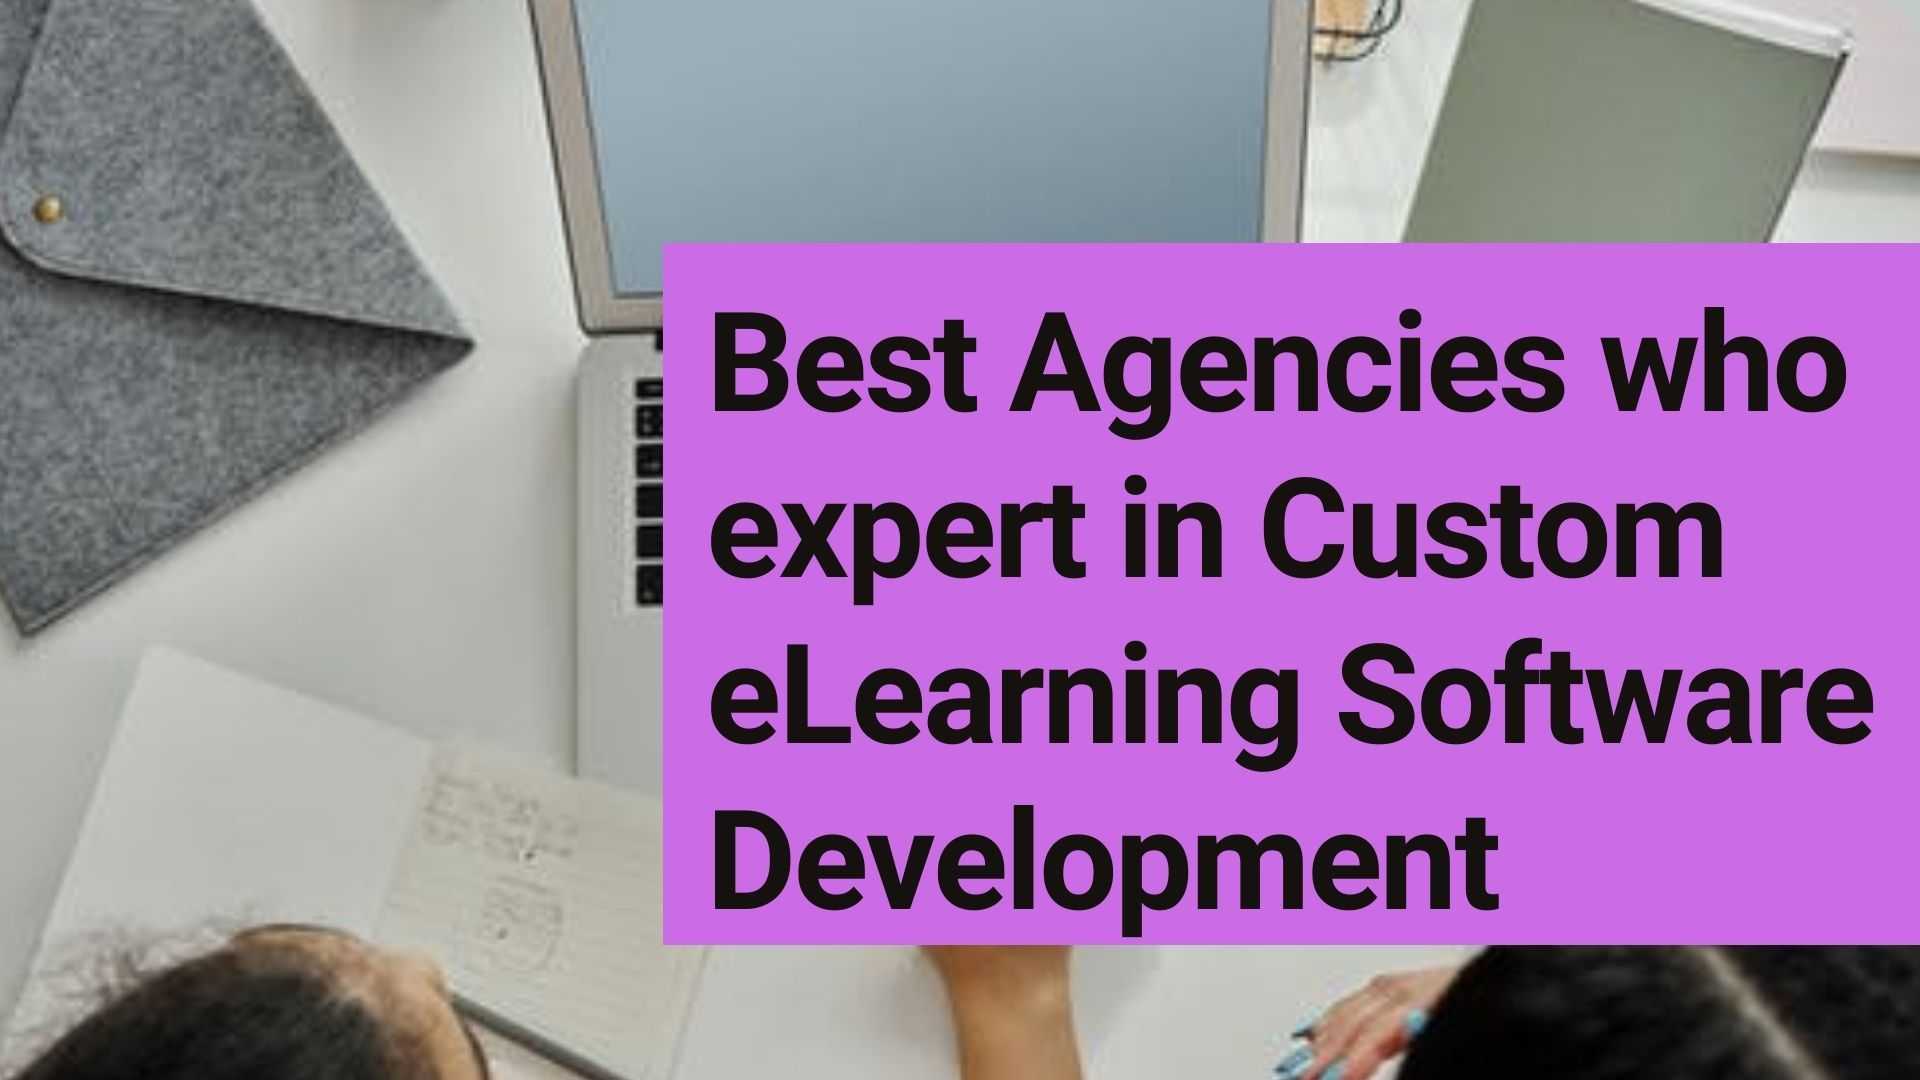 Best Agencies who expert in Custom eLearning Software Development